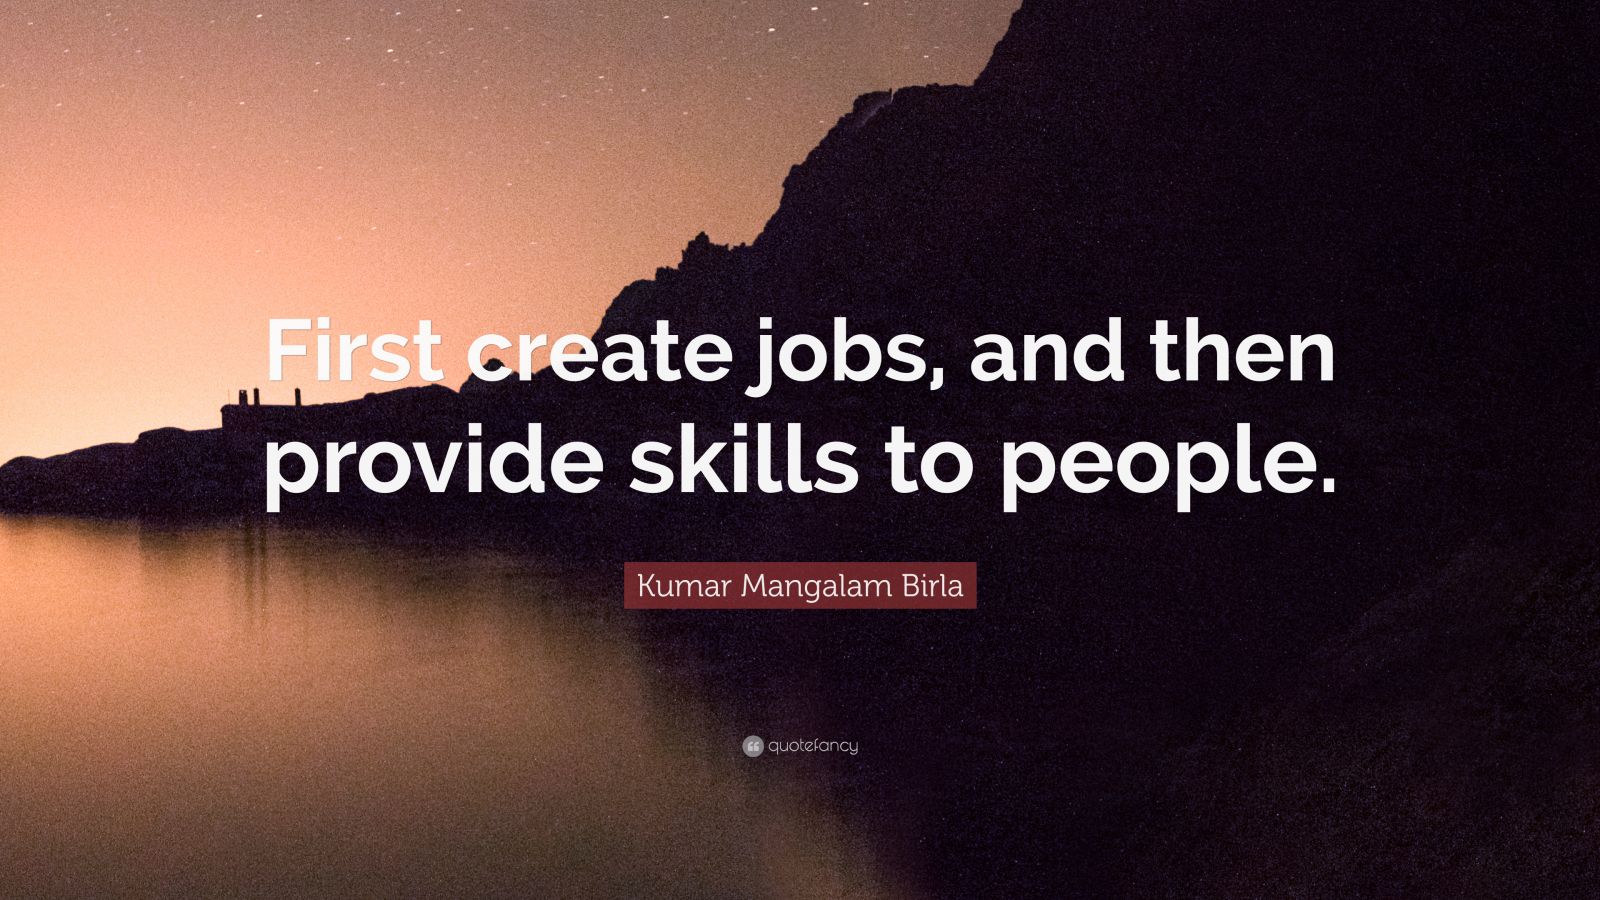 Top 9 Kumar Mangalam Birla Quotes | 2021 Edition | Free Images - QuoteFancy